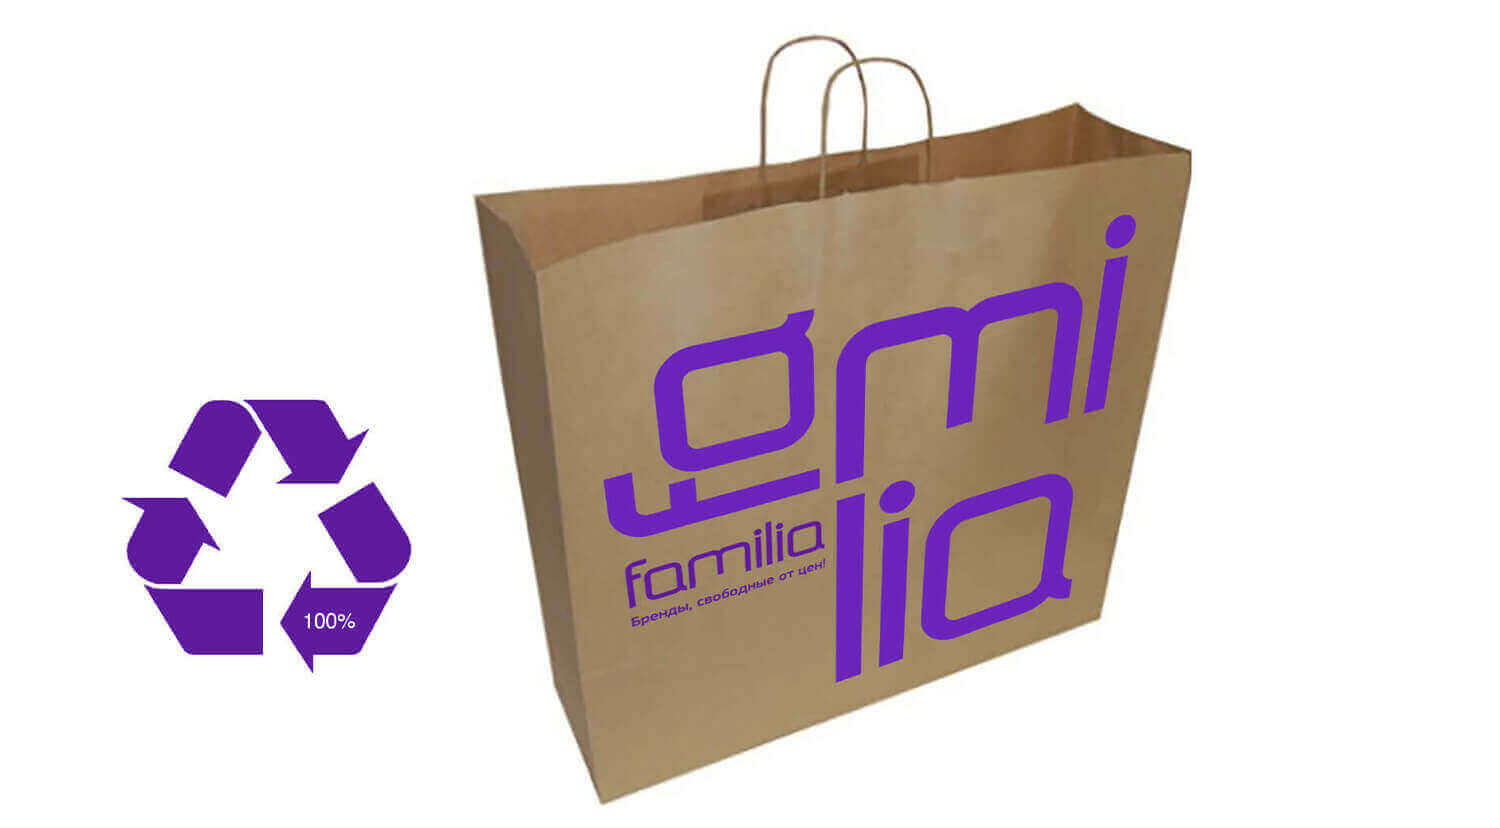 Familia fashion store Russia, Store Shopping Bag Design, Retail Branding, Brand Identity, Graphic Communications - CampbellRigg Agency